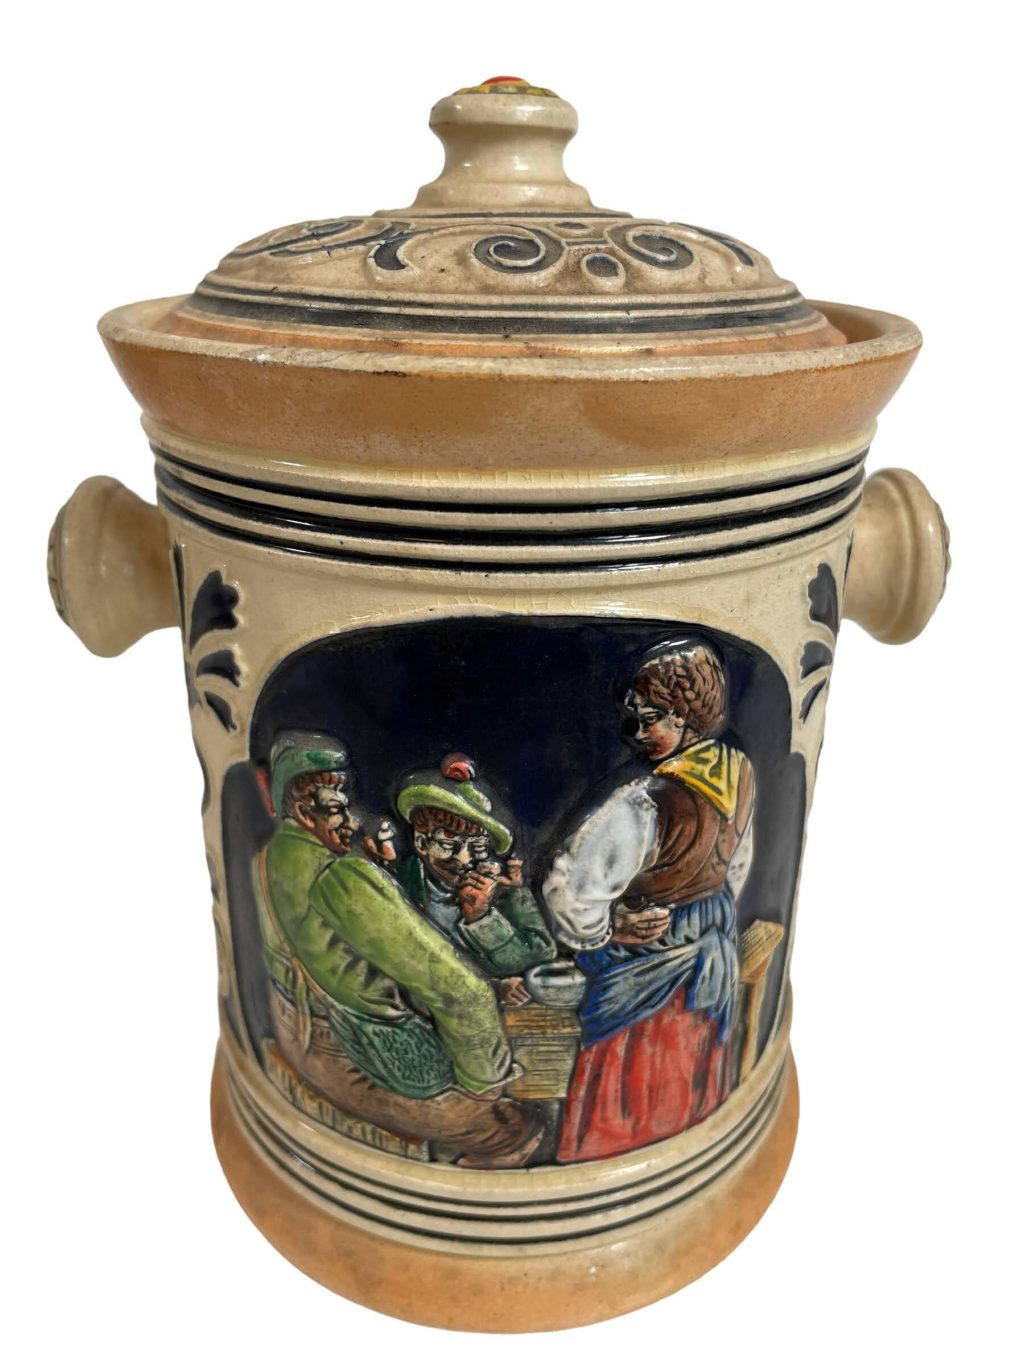 Vintage German Ceramic Tobacco Pot Humidor Smoking Pipe Tobacciana Storage Box Decorated circa 1950-60’s